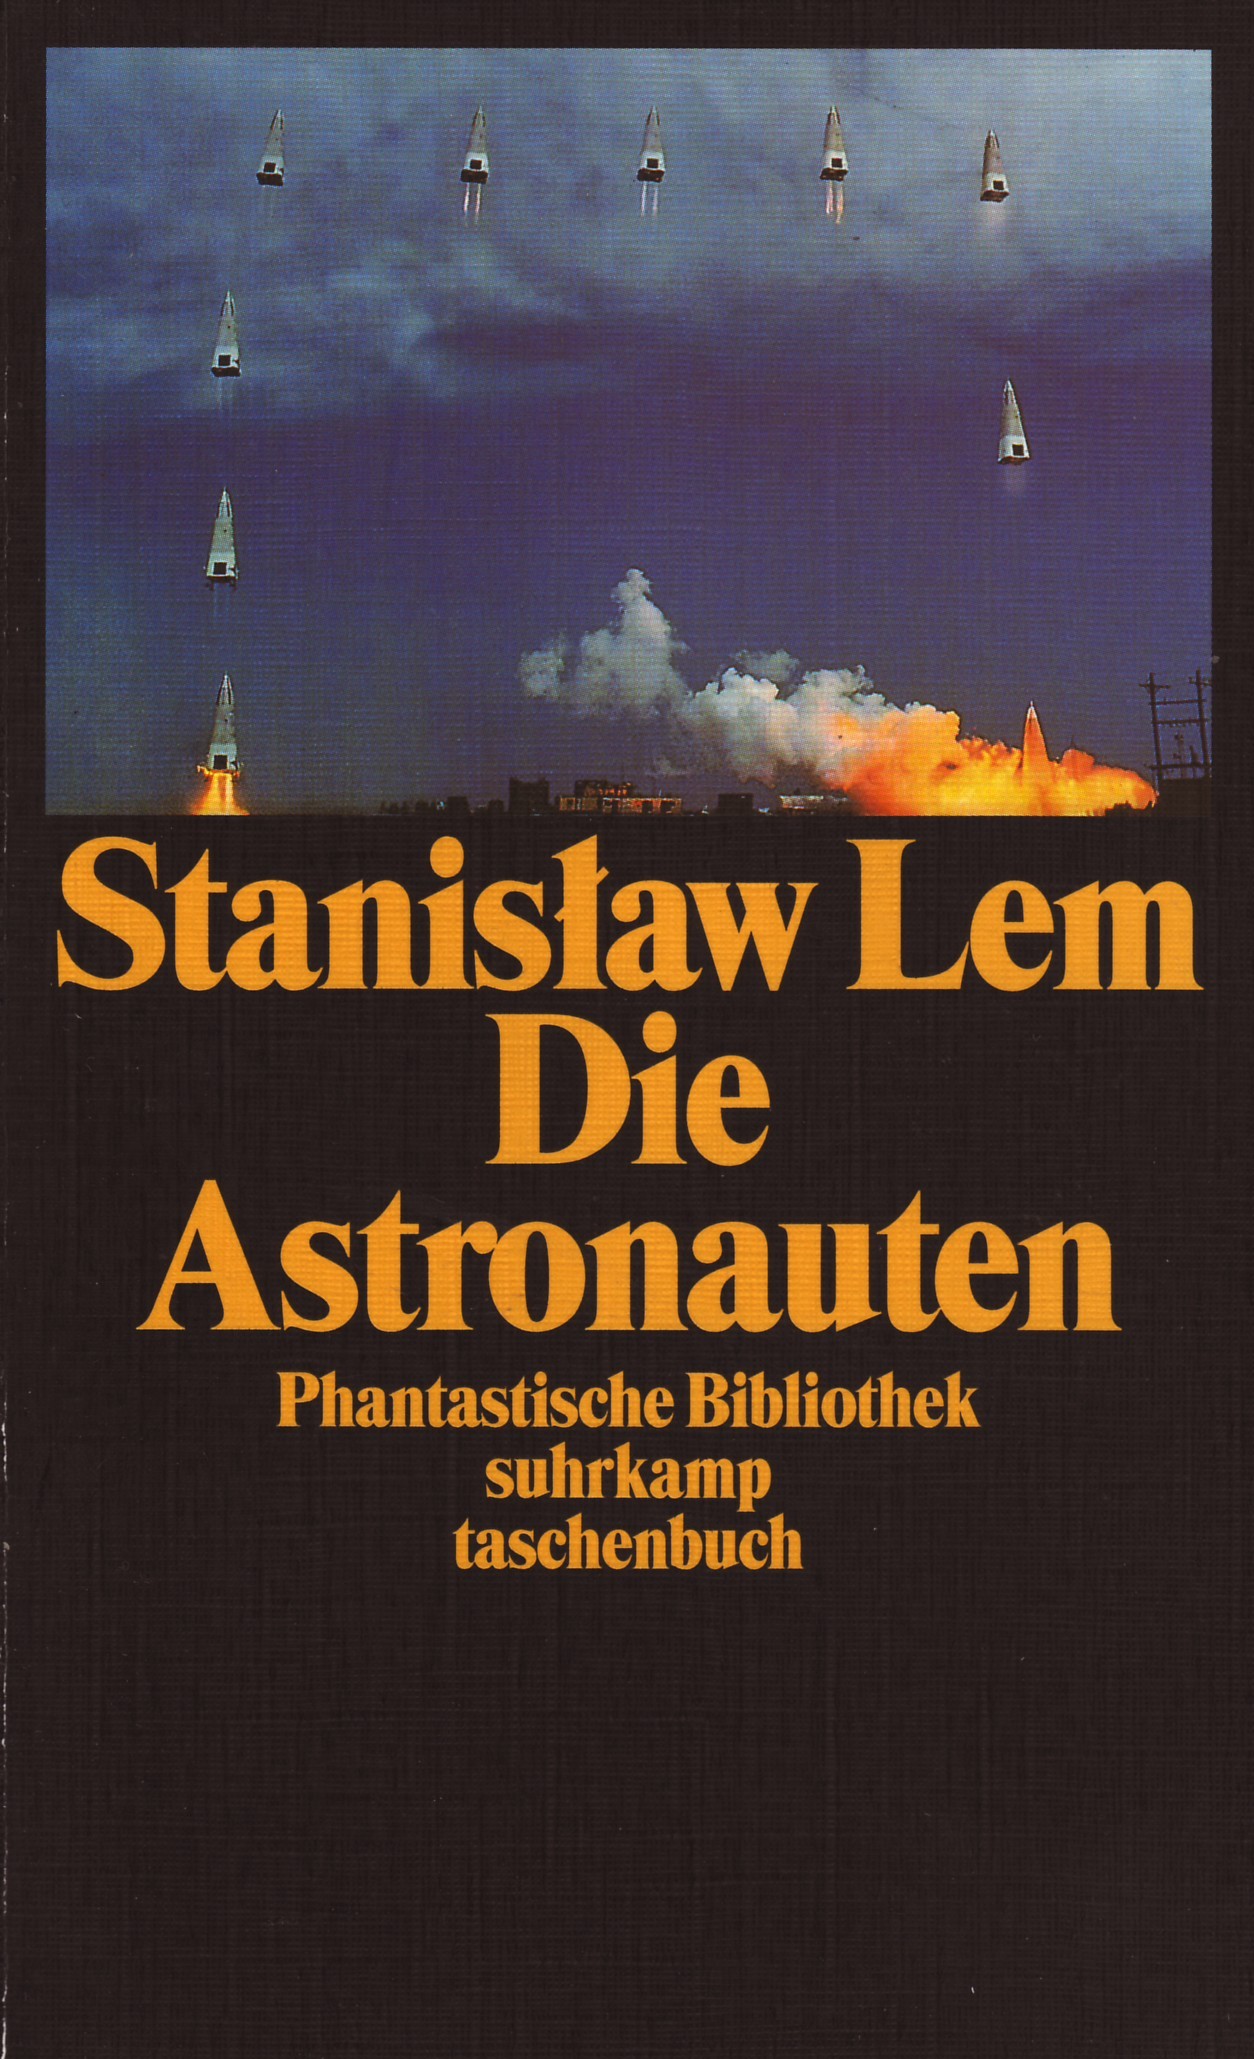 Astronauts German Suhrkamp 2003.jpg